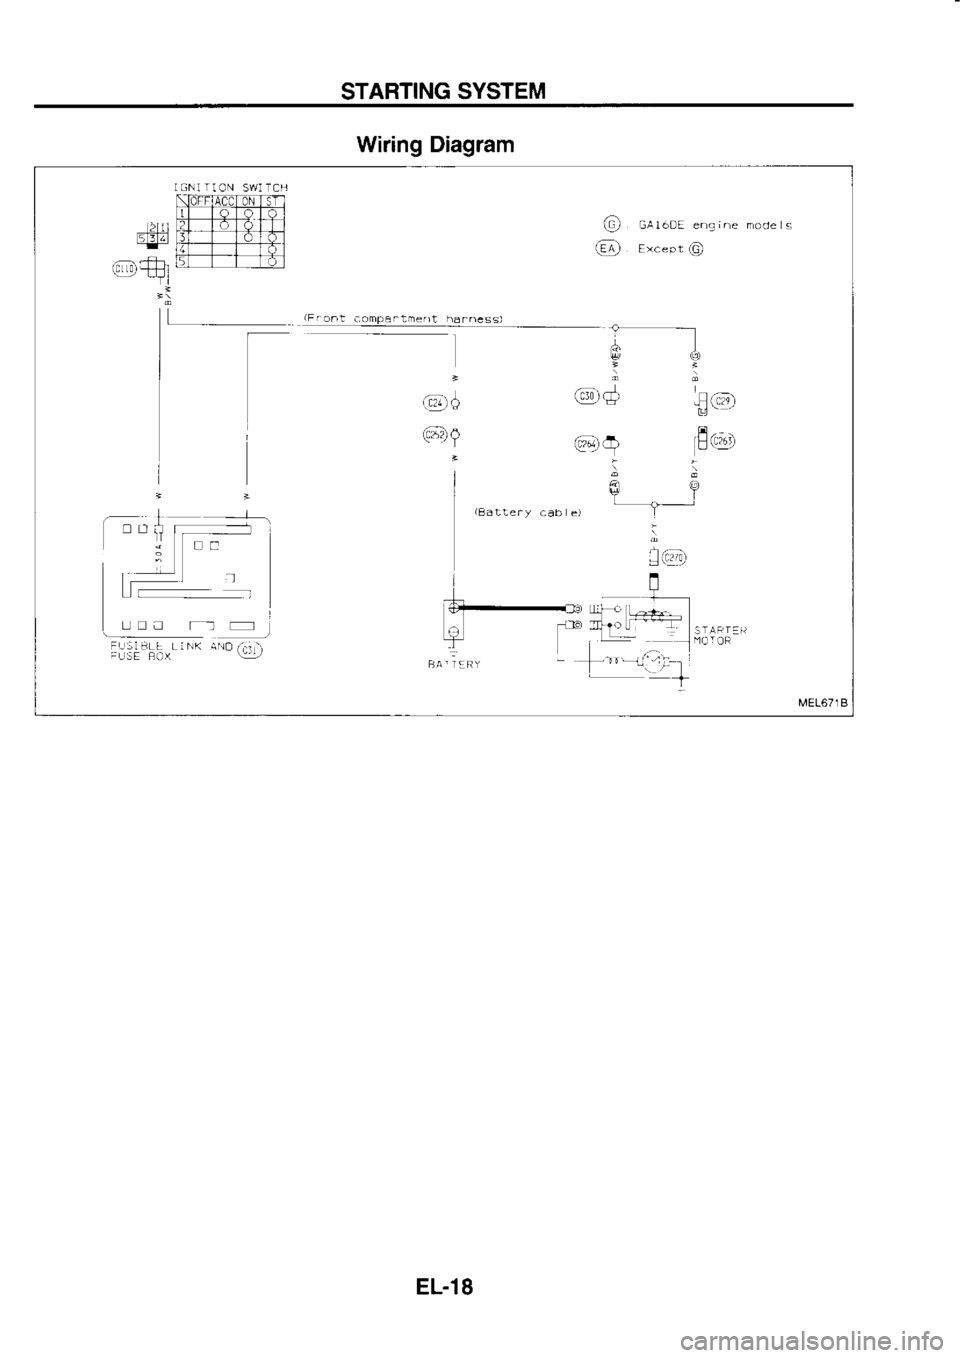 NISSAN SERENA 1993  Service Repair Manual STARTING 
SYSTEM
Wiring  Diagram
@ clreor 
engine mocJe 
s
fi)  e..pt 
@
I
@;
615)o (cl0)[r 
n
[-r]
E
/:;-  ,  1 l
!.&_r  ! 
tr  Ll
ii
ad)  6i
{pT
.)-l- @
.:^r
i
!@.,
5TAFI:Ii
|]c  r0R
UNJ 
f _] 
E
F